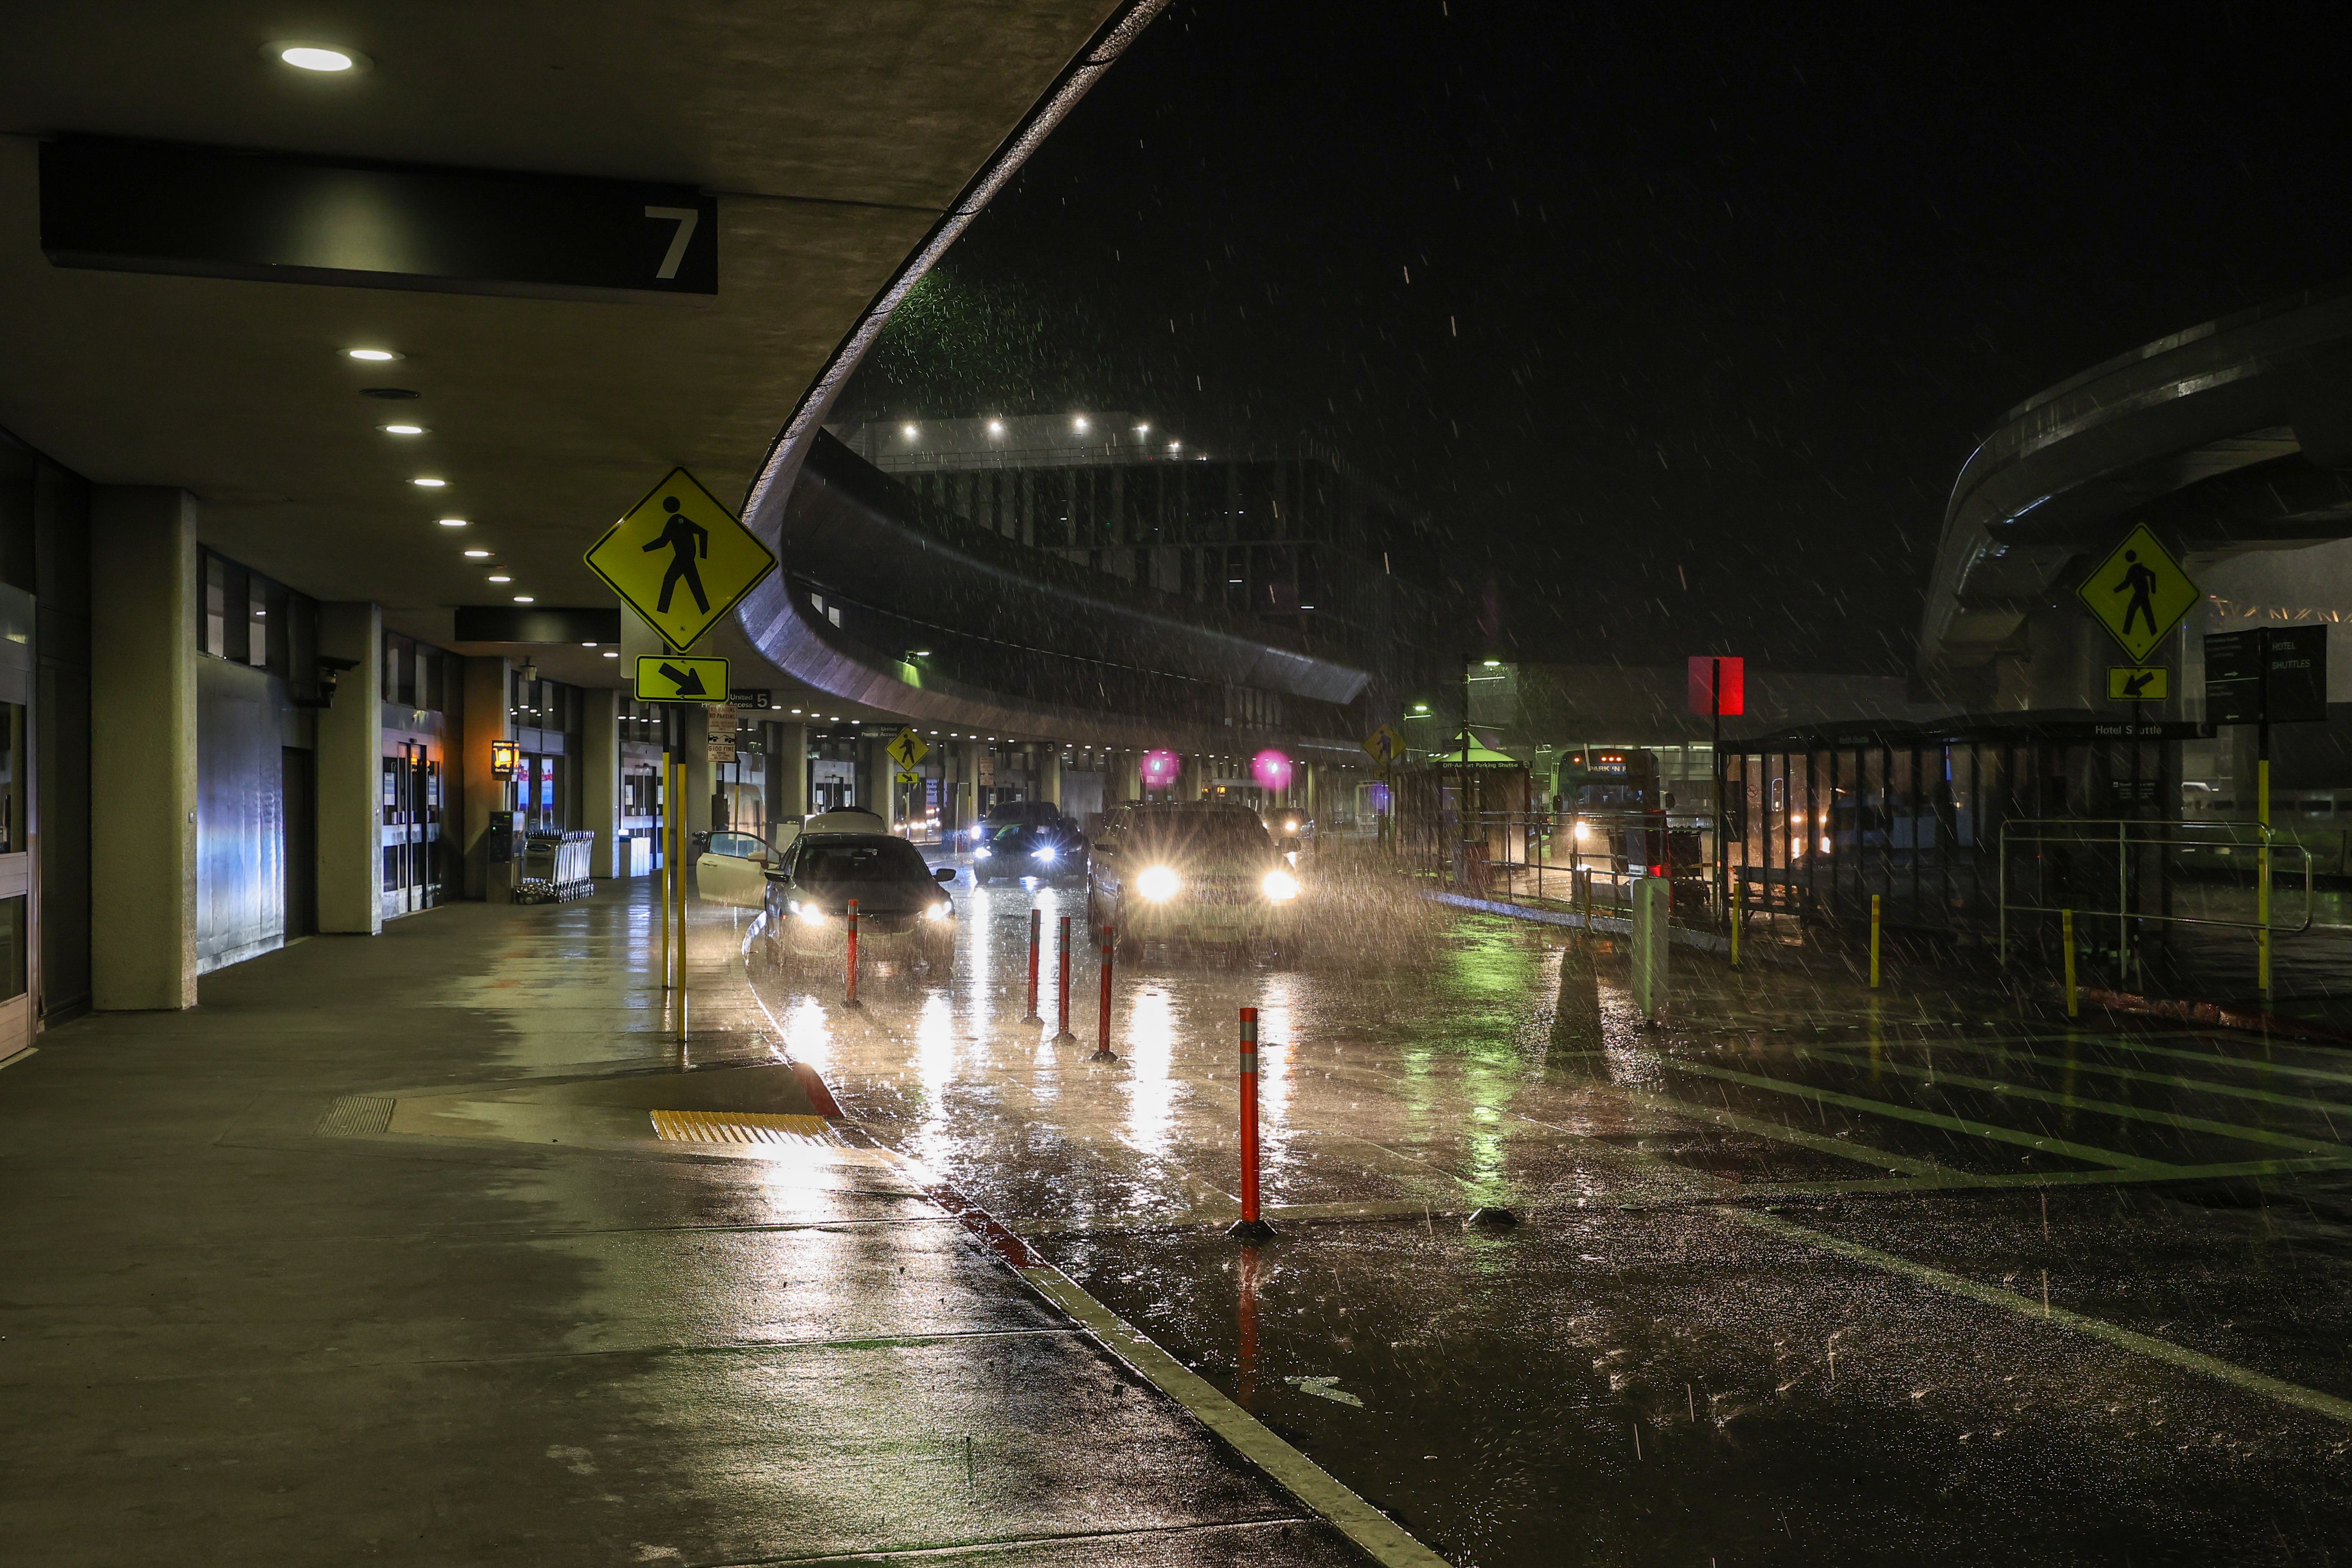  San Francisco International Airport (SFO) is seen during heavy rain in San Francisco, California, United States on January 4.